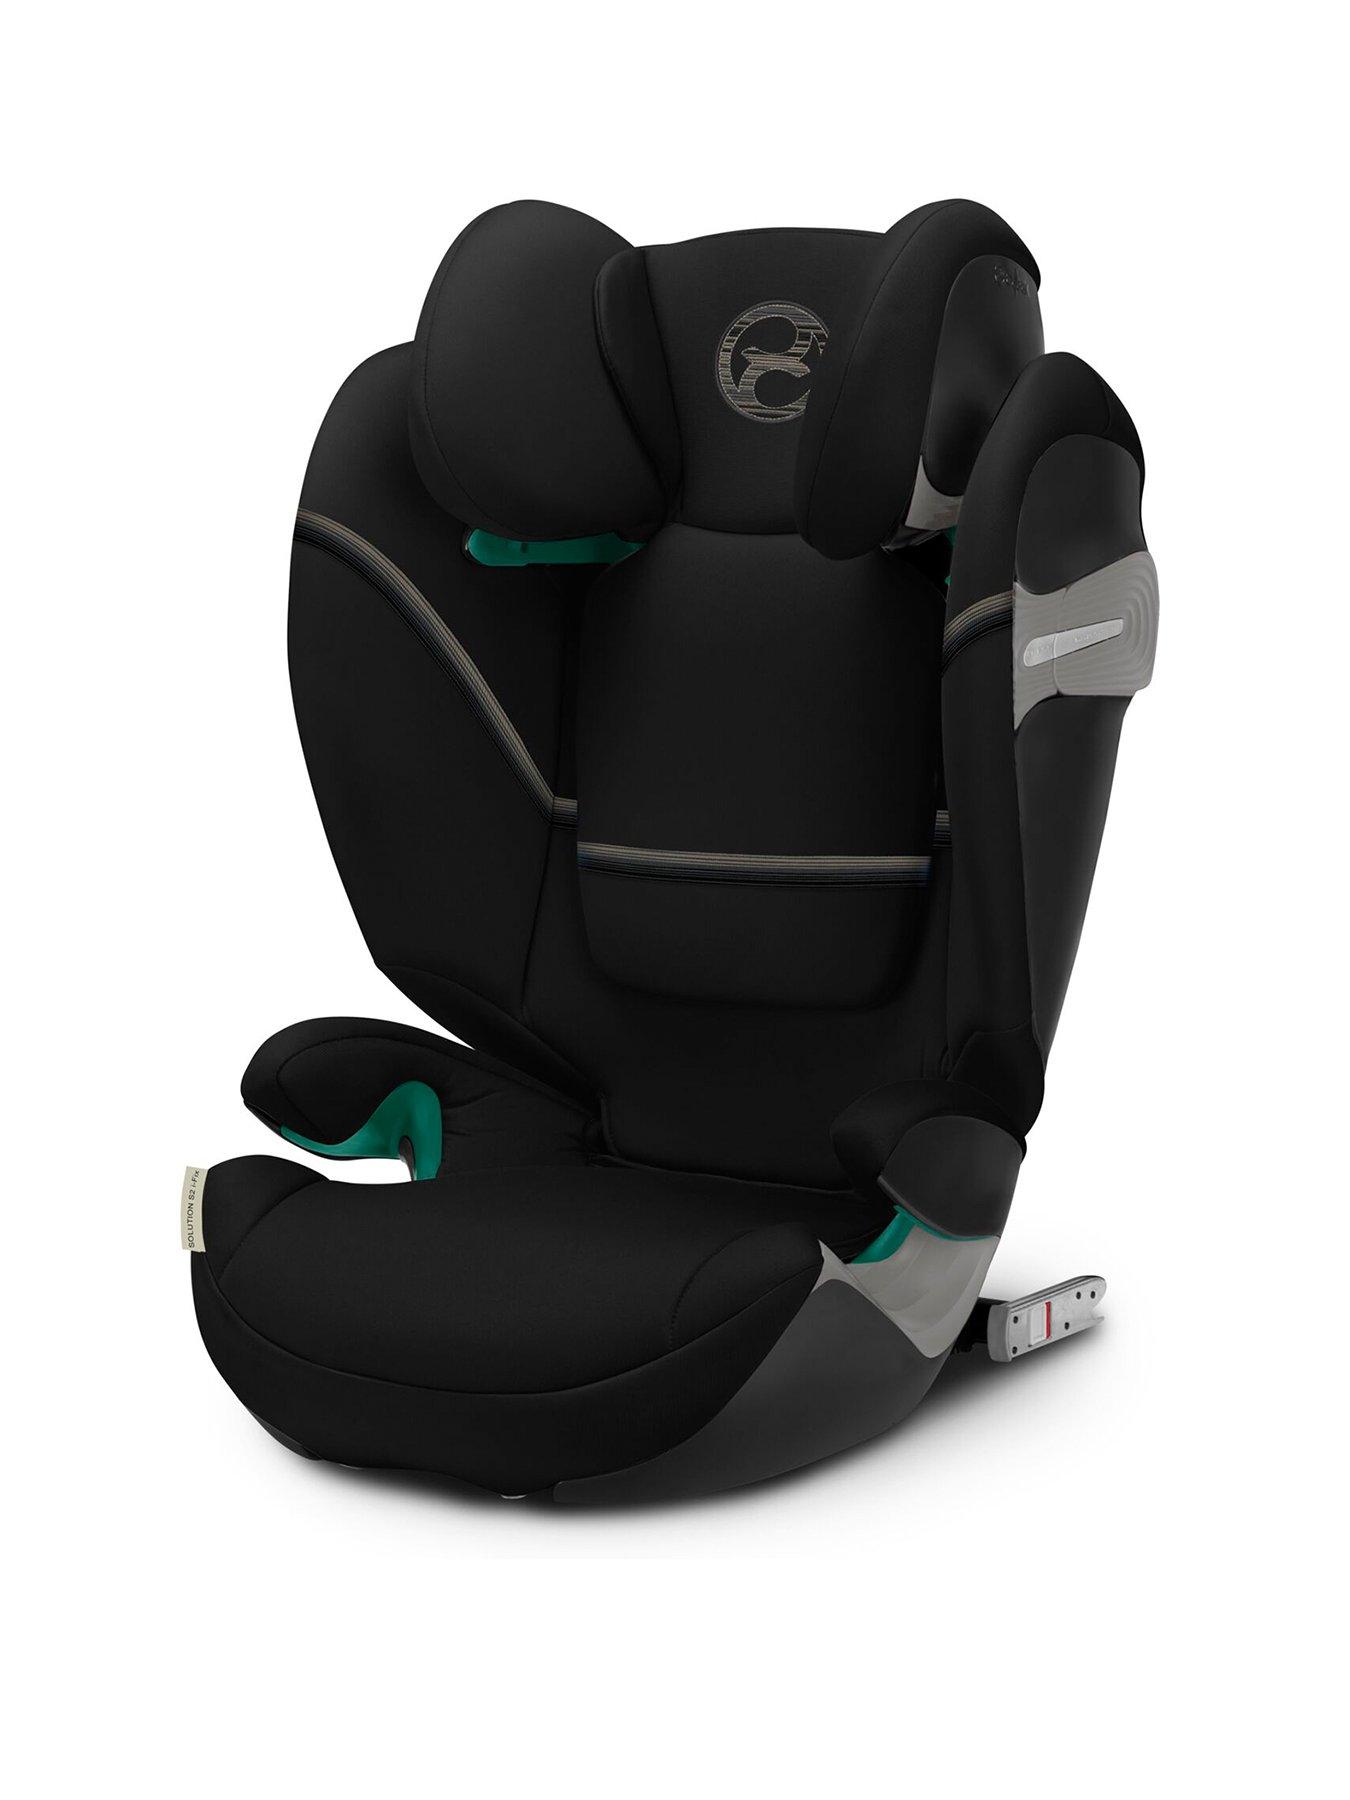 Buy Cybex Pallas G I-Size Moon Black Car Seat, Car seats